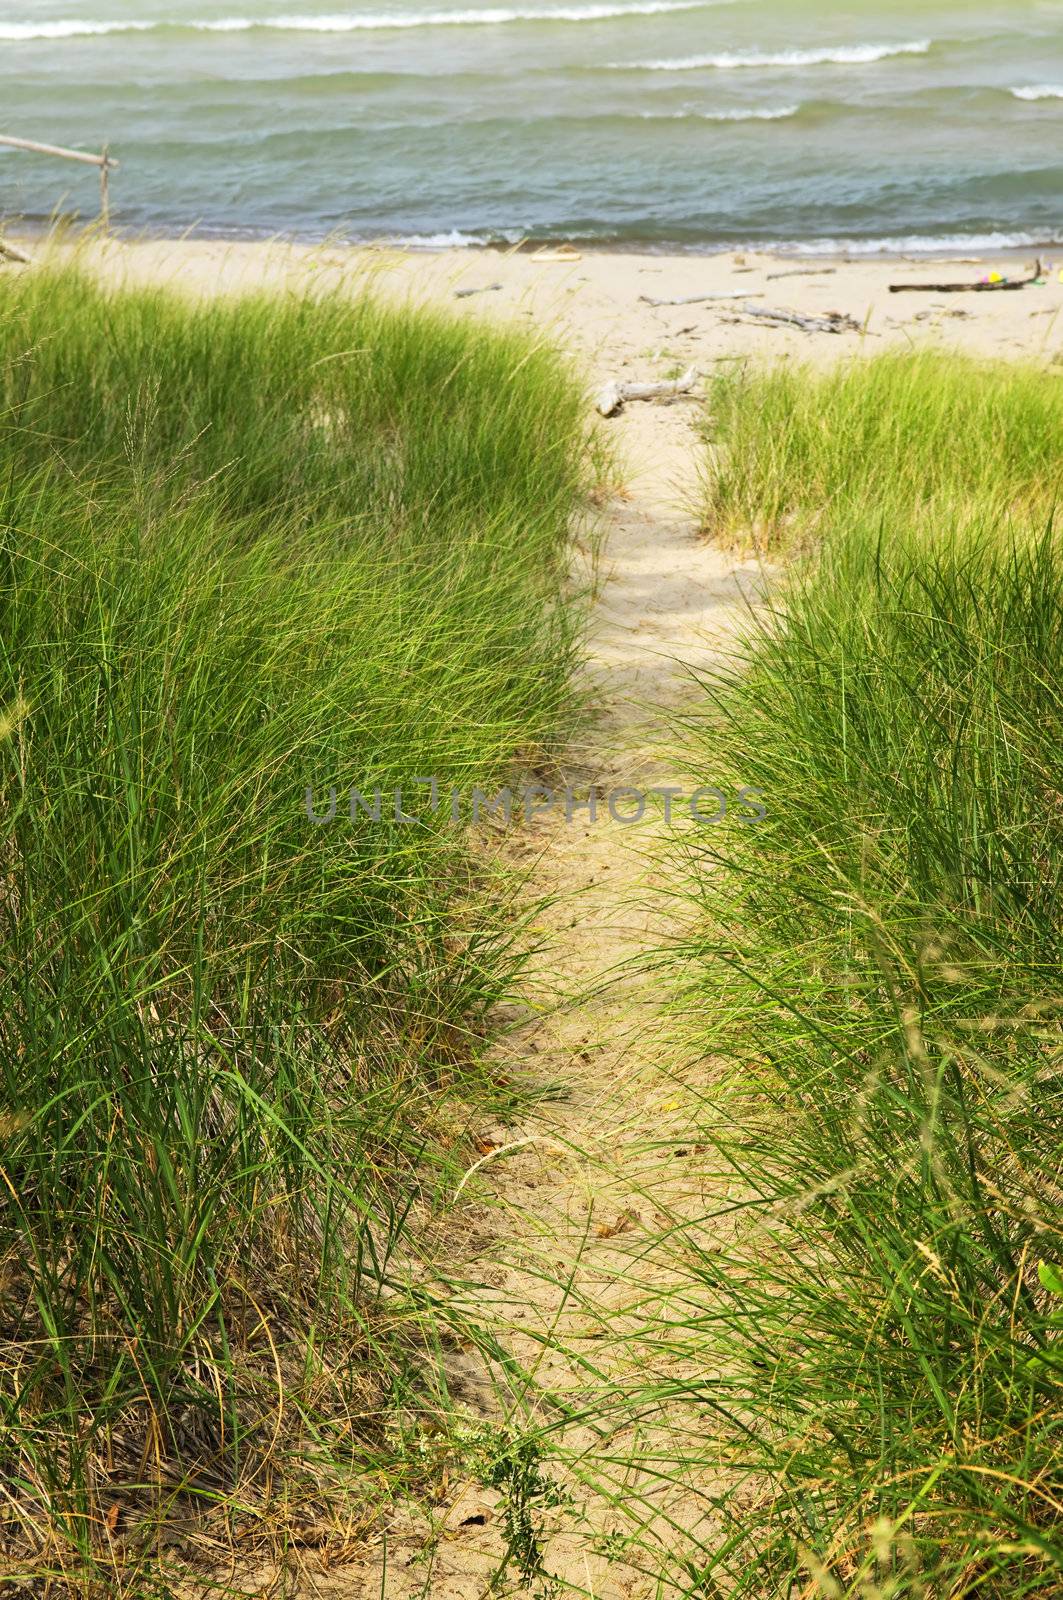 Entrance path to beach. Pinery provincial park, Ontario Canada